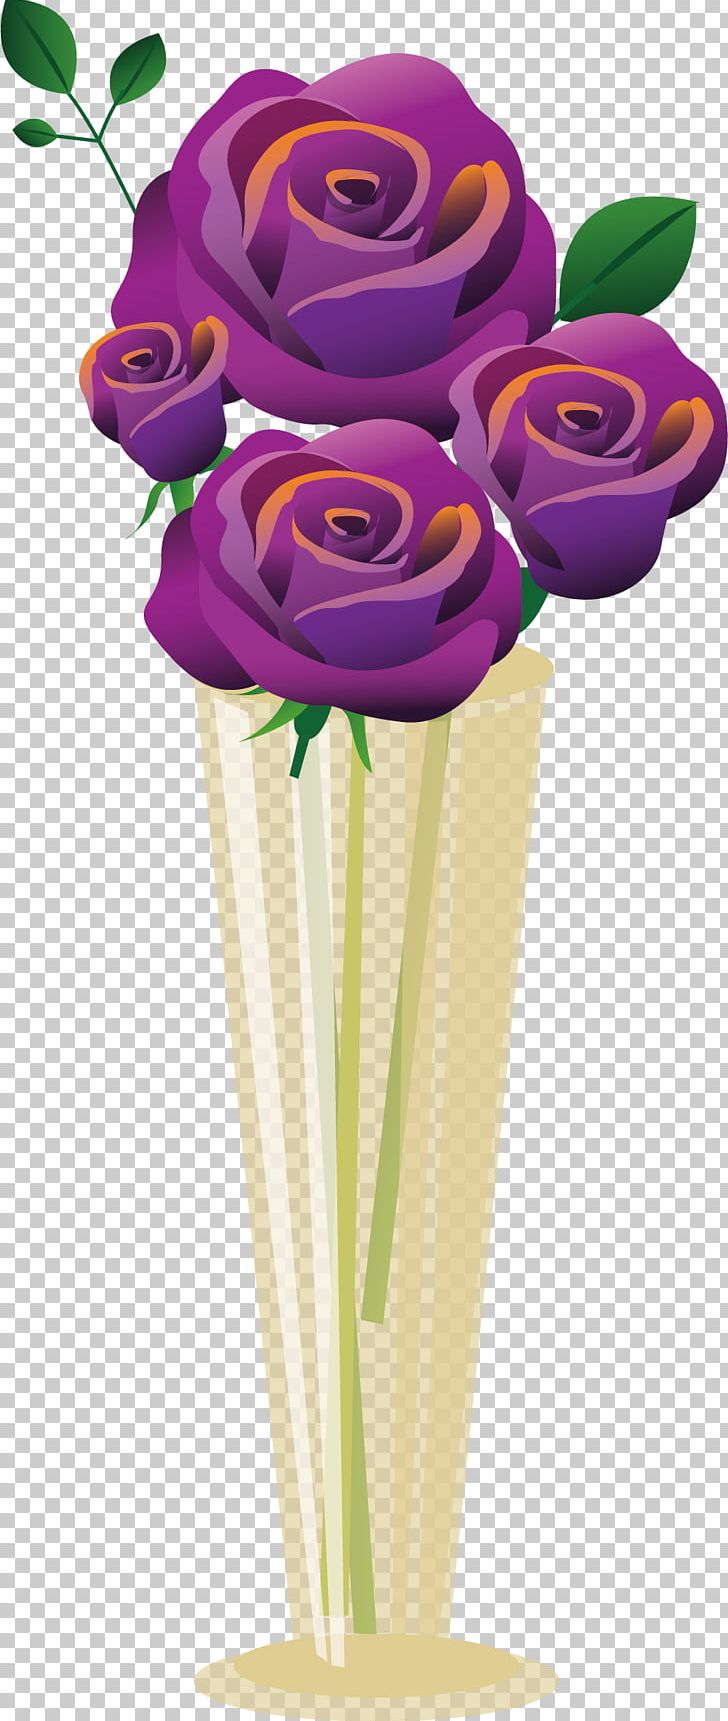 Garden Roses Beach Rose Flower Vase PNG, Clipart, Artificial Flower, Cut Flowers, Decoration, Decorative Elements, Design Element Free PNG Download